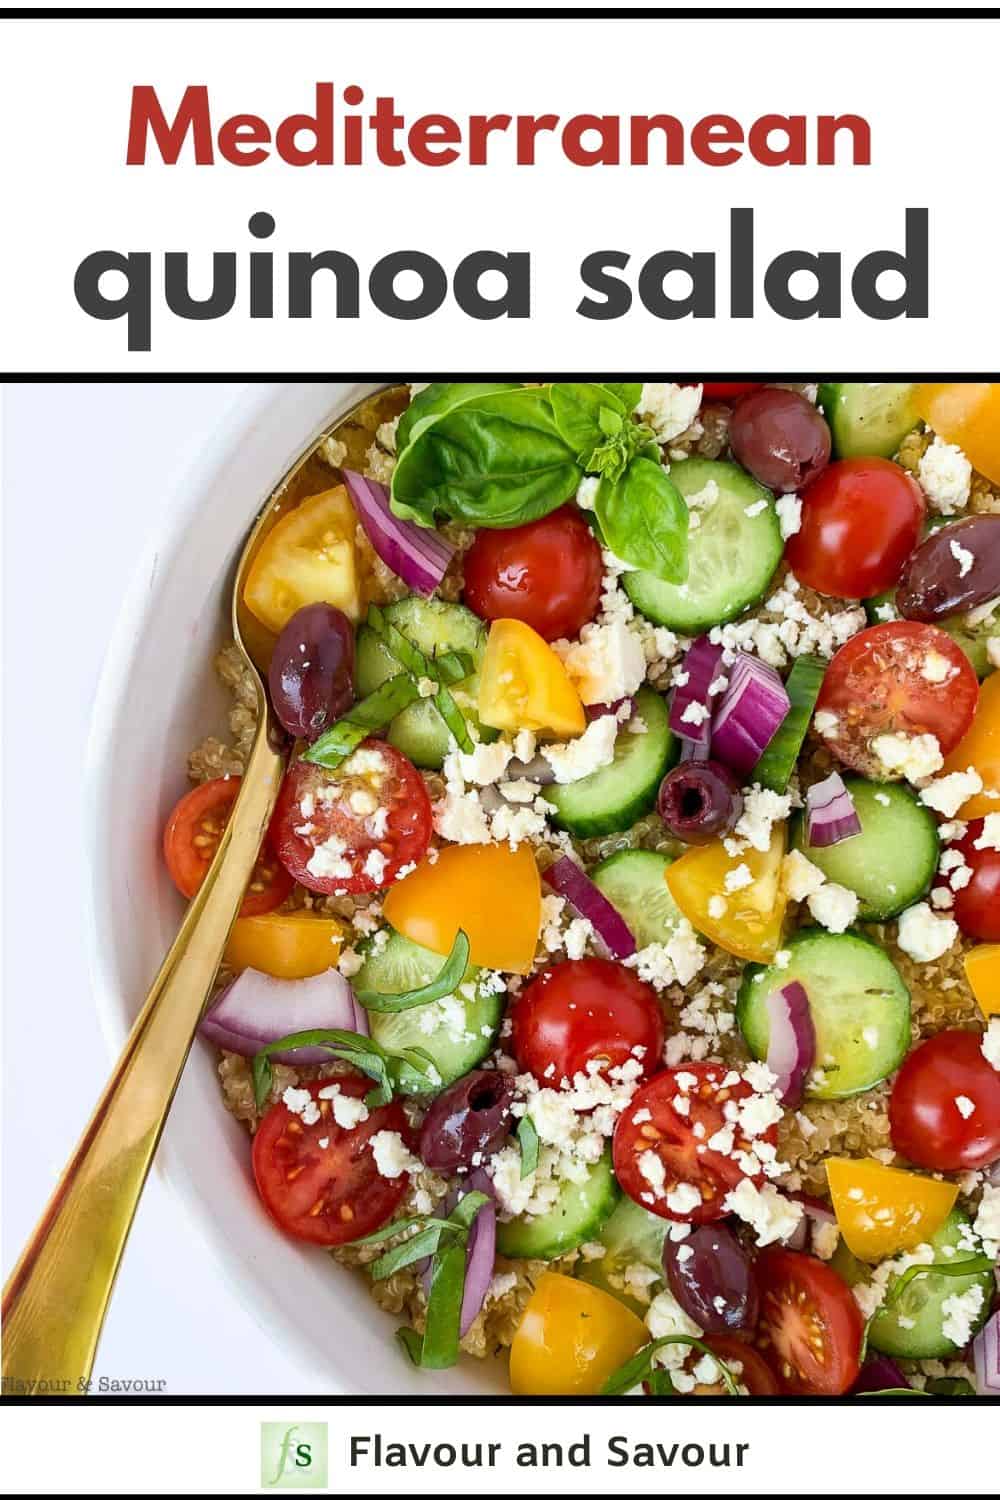 Mediterranean Quinoa Salad with text overlay